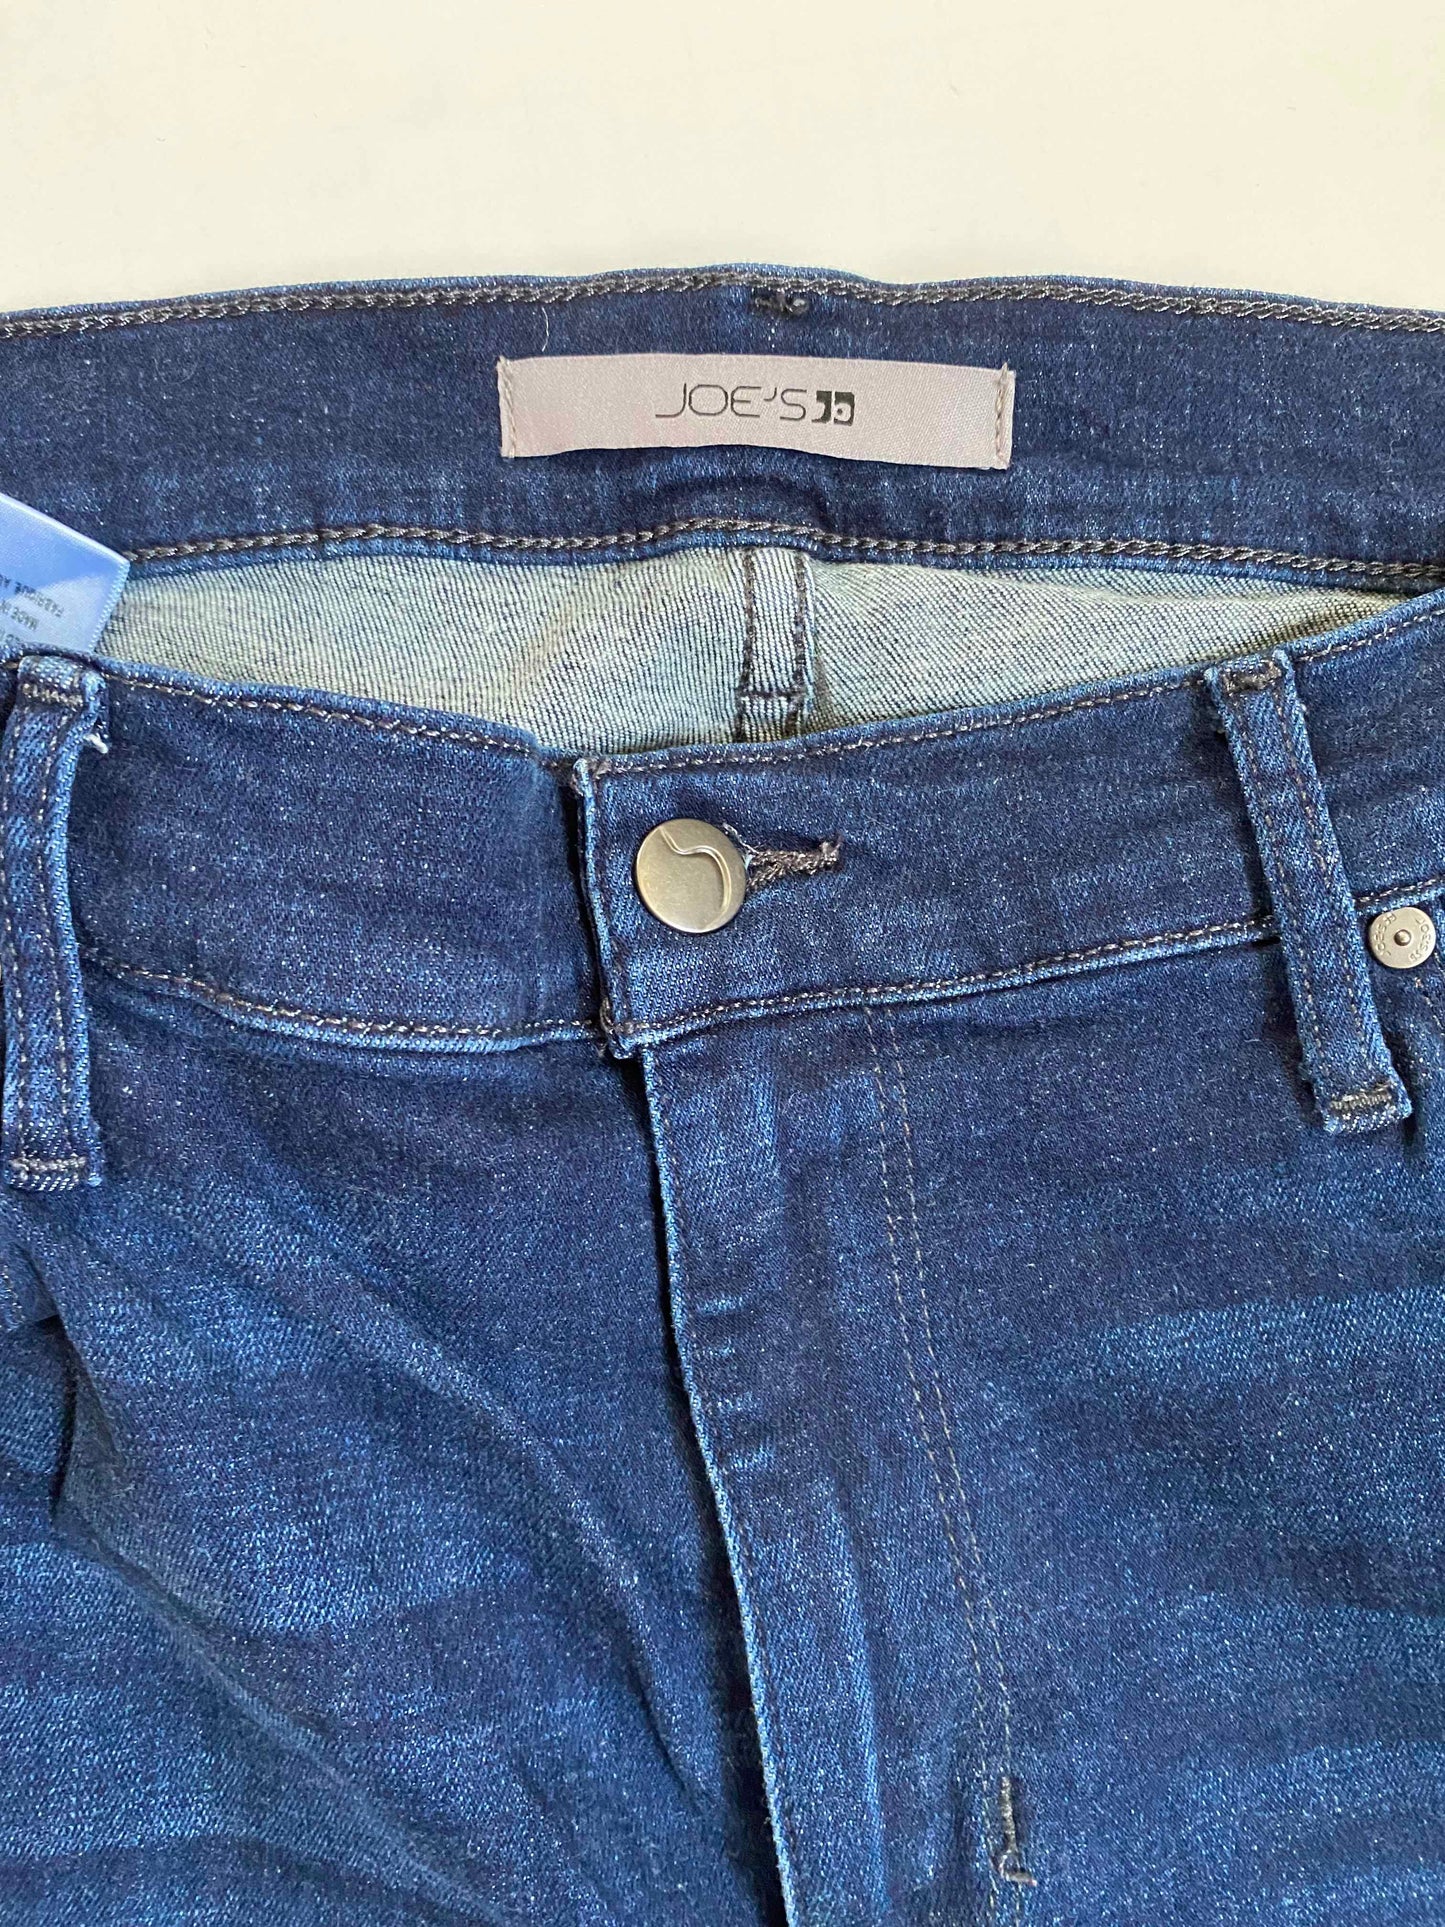 Joe's straight jeans, 36W (Men's M)